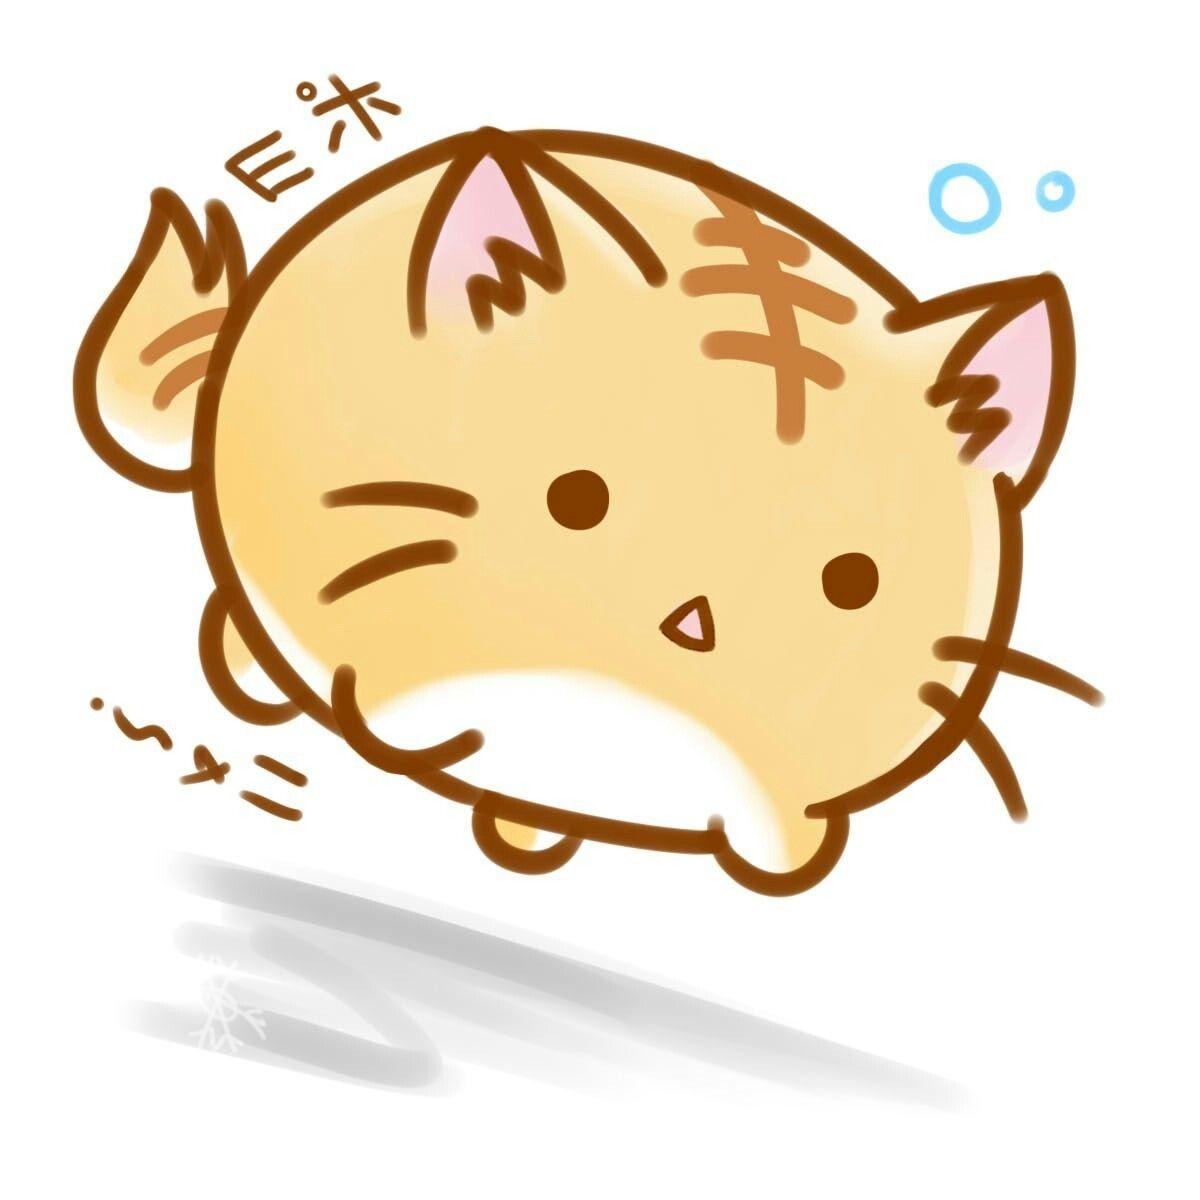 Zodiac Signs As Anime Characters! - cats - Wattpad